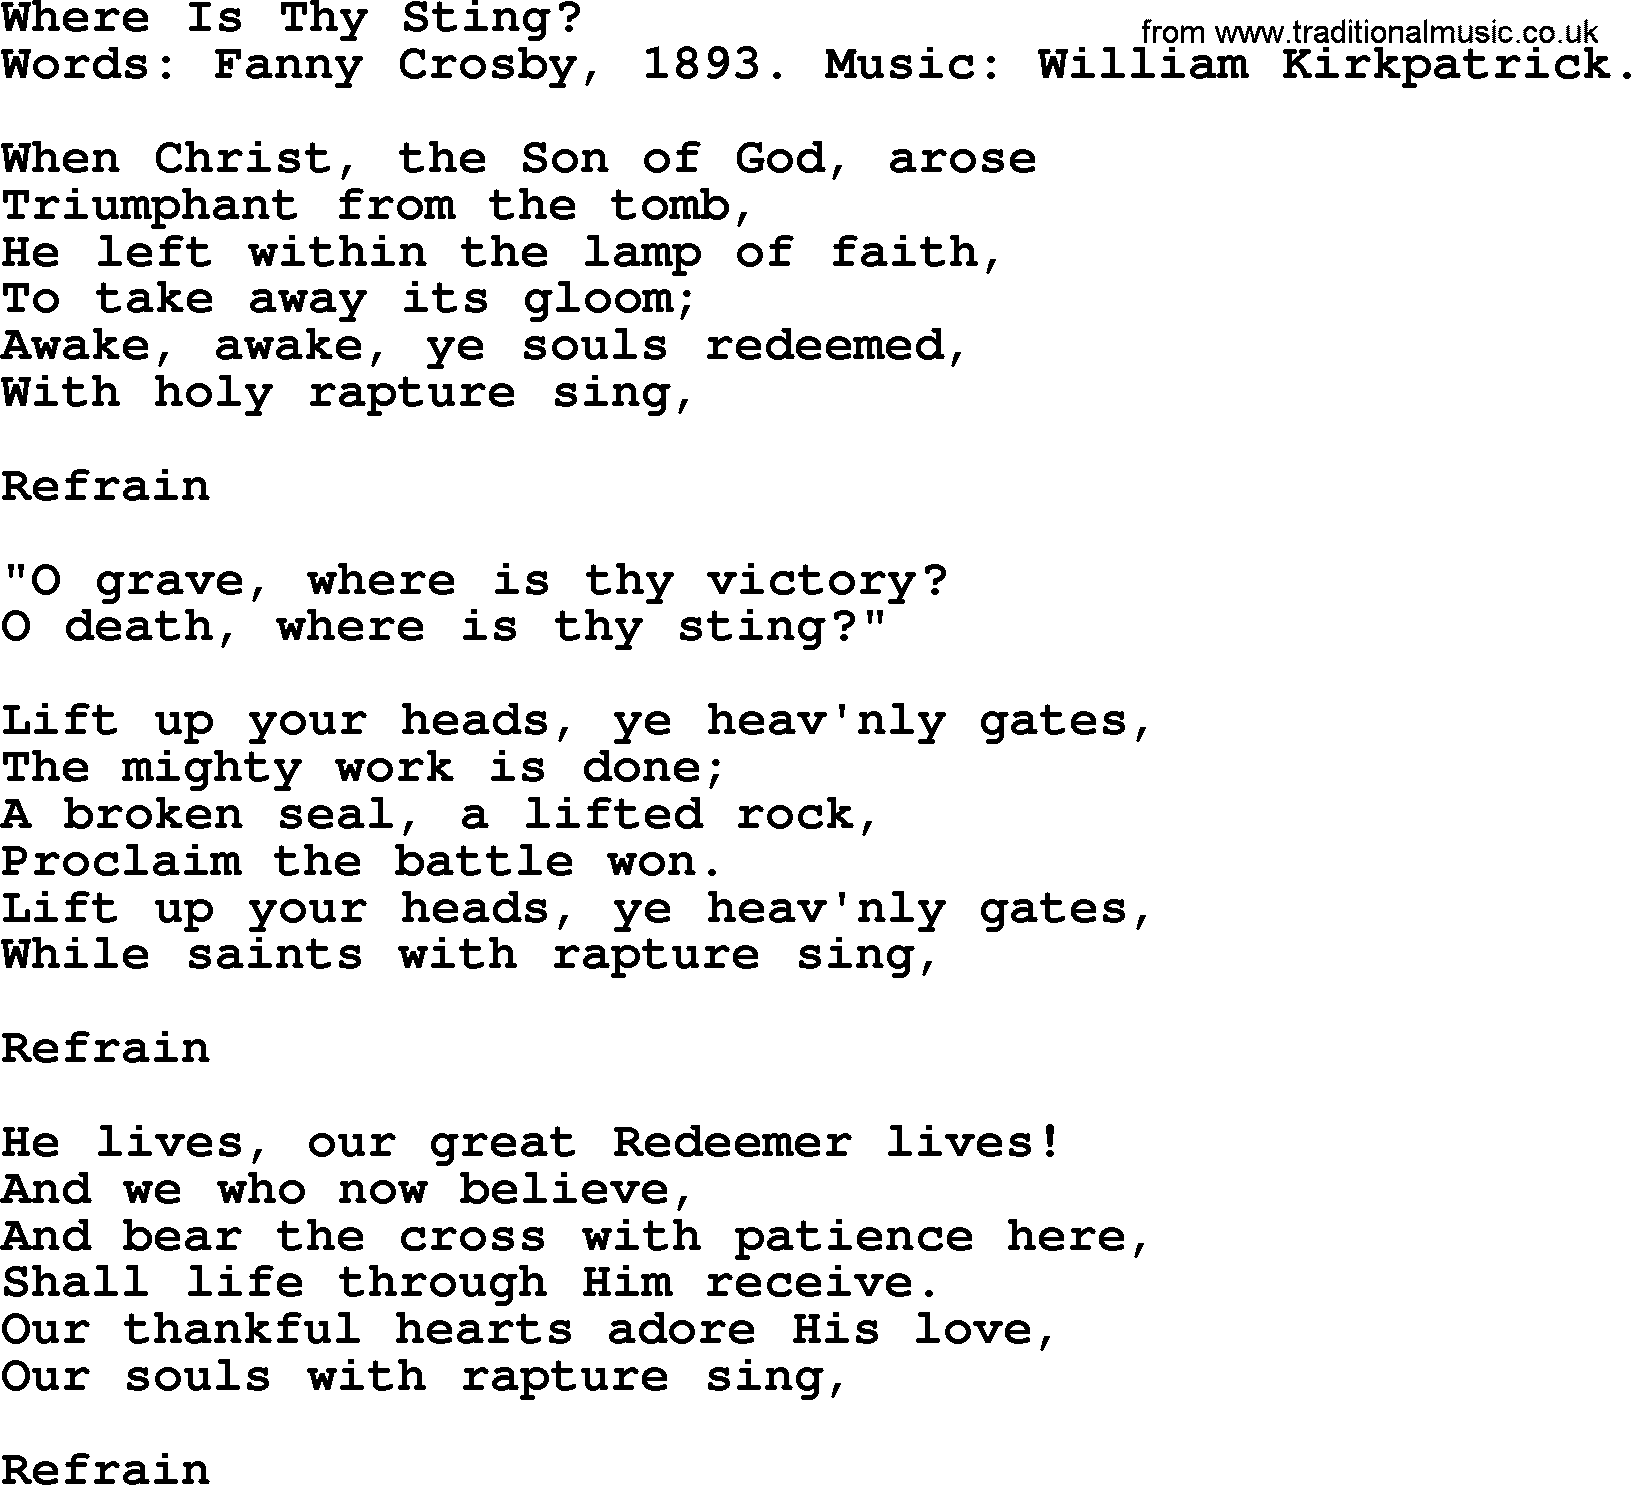 Fanny Crosby song: Where Is Thy Sting, lyrics